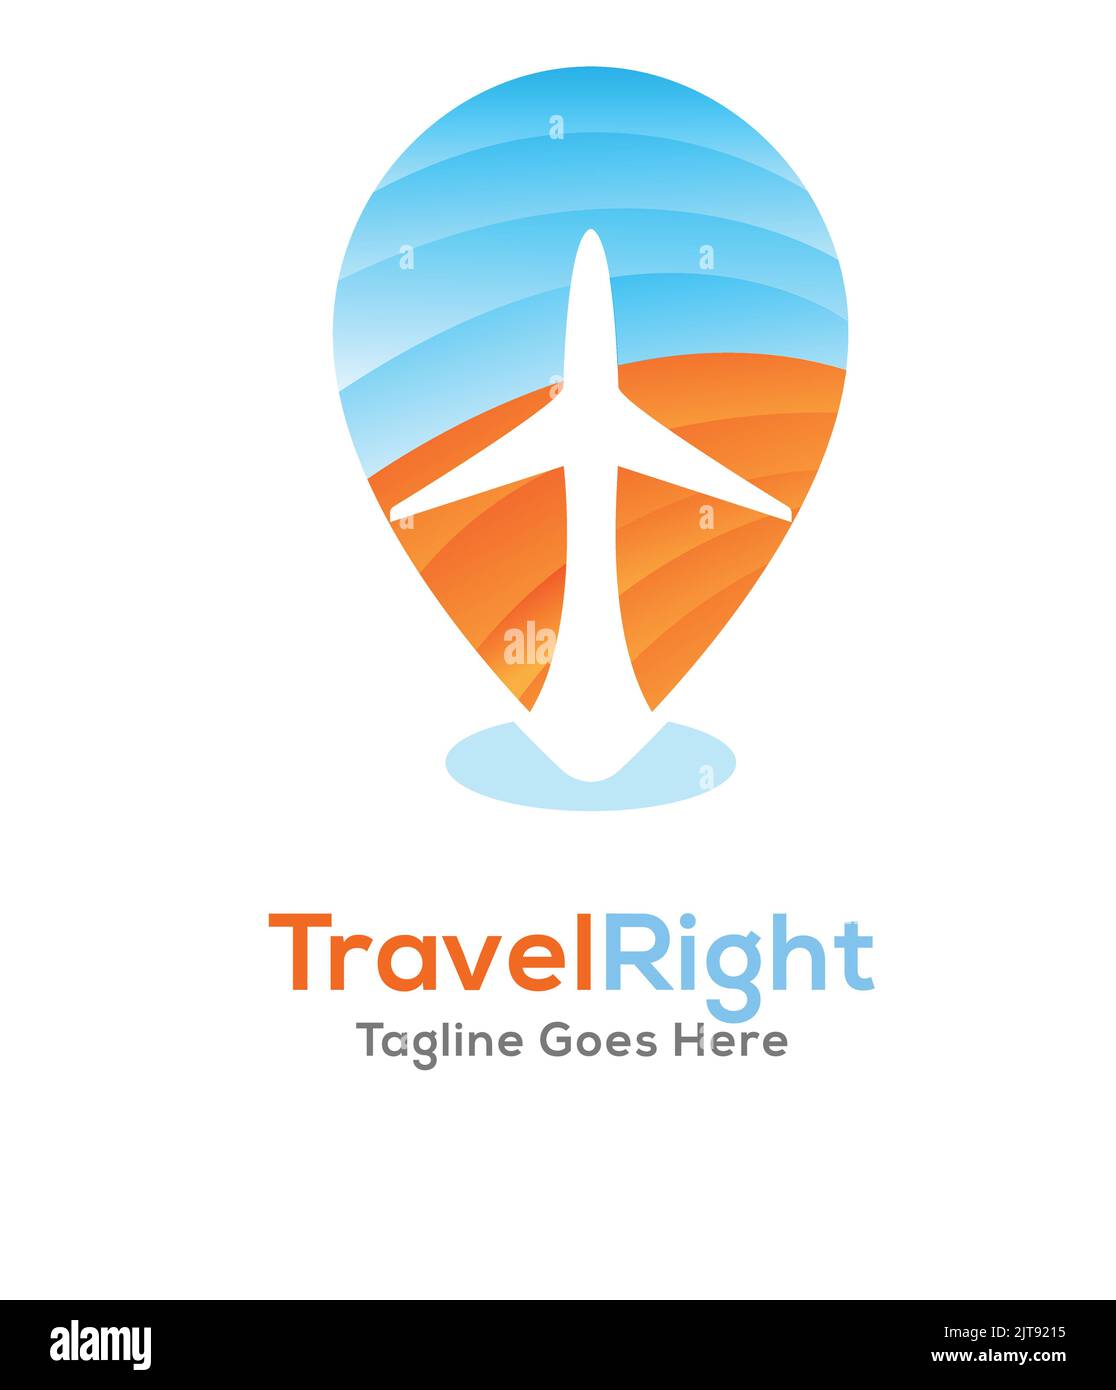 Reiseunternehmen Logo Tourismus Fluggesellschaft Logo Urlaub Urlaub Reise fliegen Reise Flugzeug Geschäft Vektor Grafik Logo Transport Flug Stock Vektor